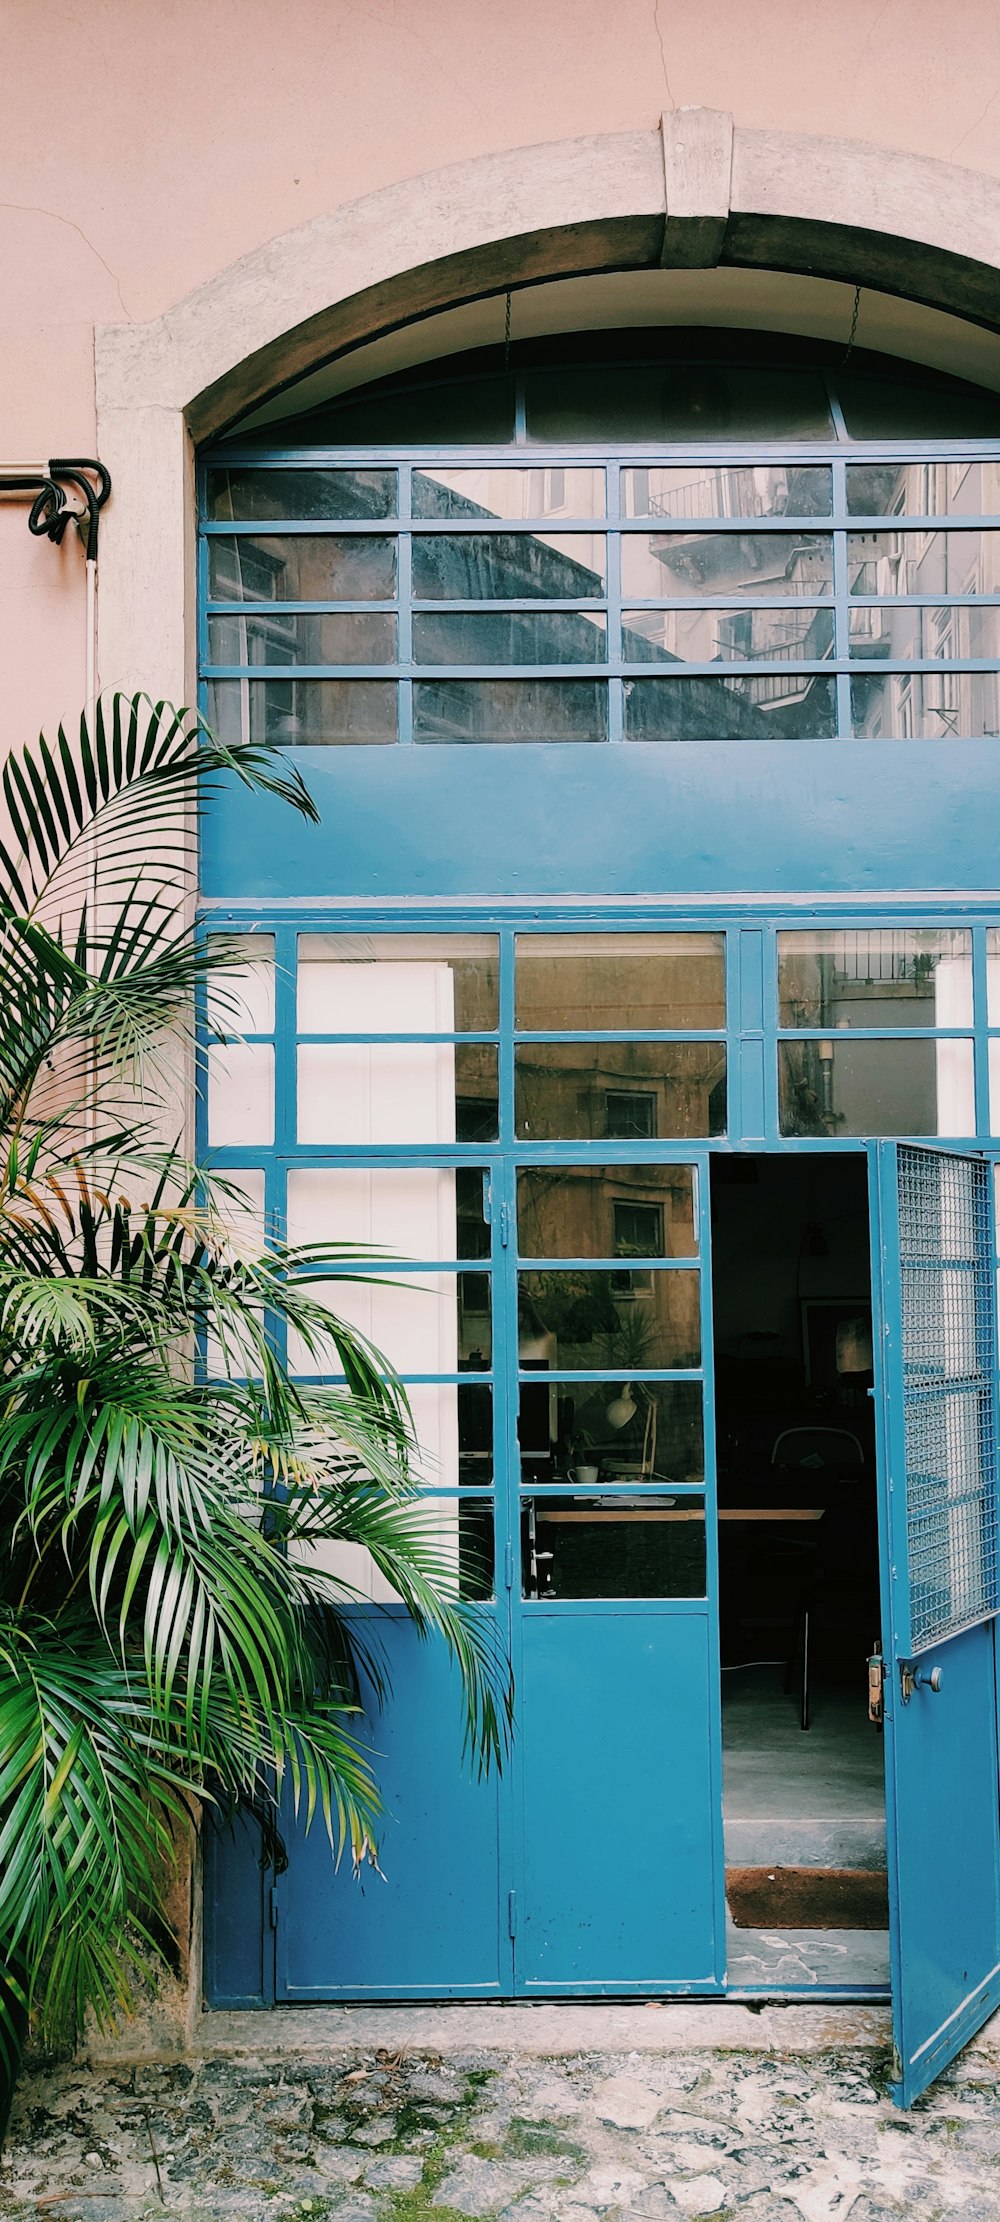 green palm plant near blue wooden framed glass window